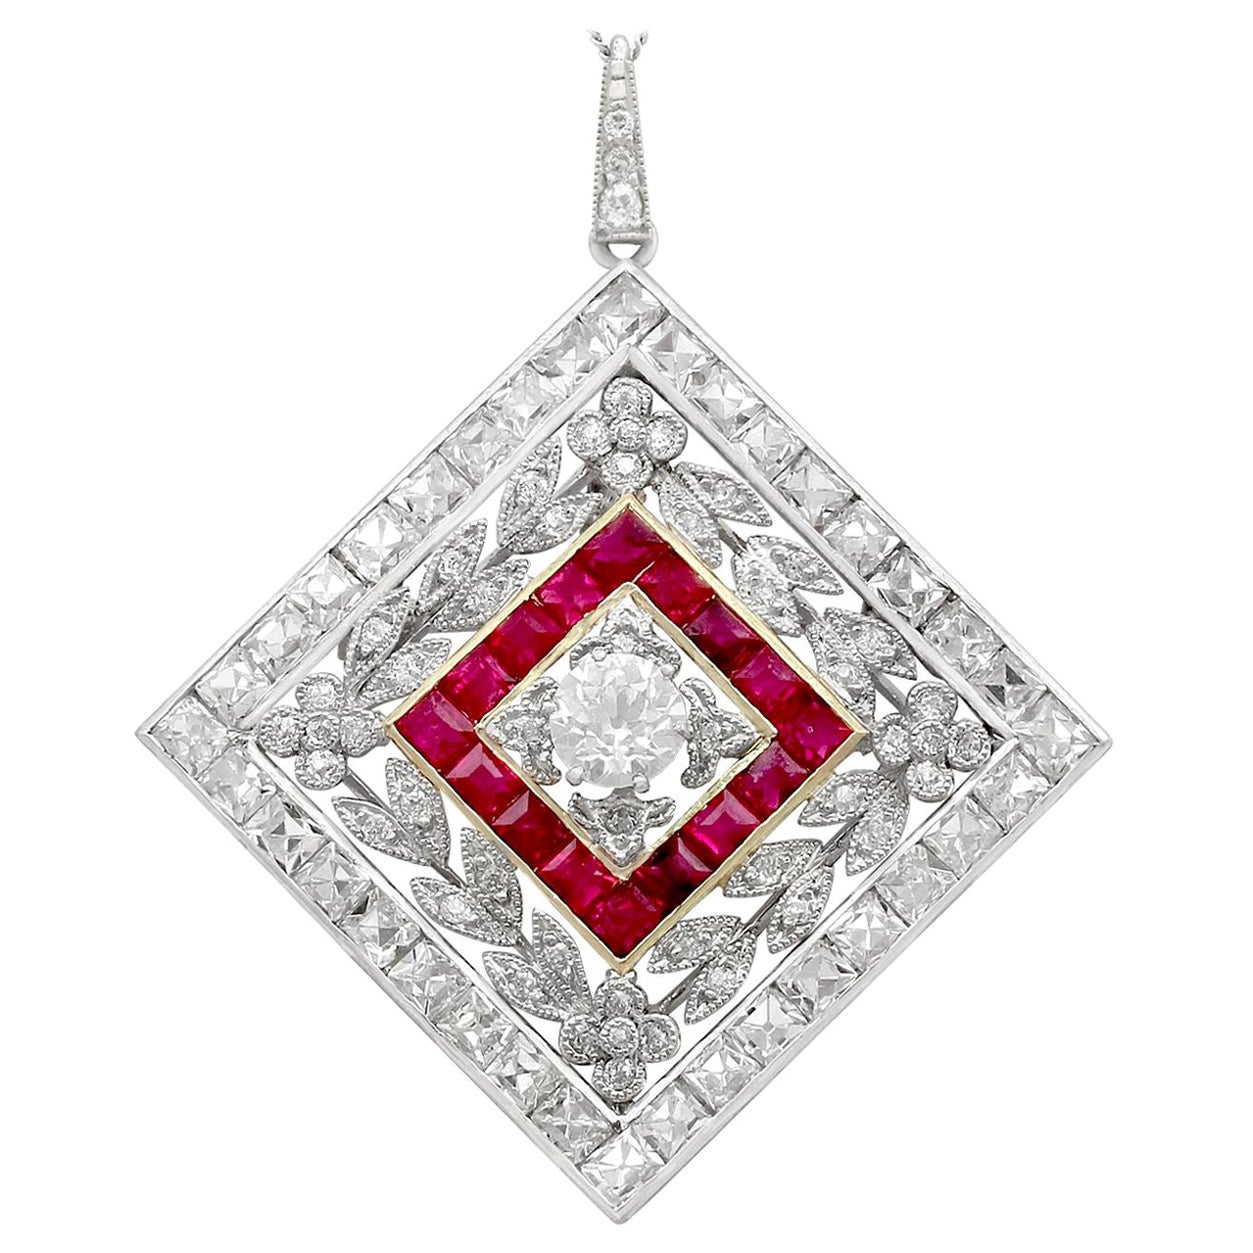 Antique 1900s Ruby 3.48 Carat Diamonds Gold Platinum Pendant Brooch